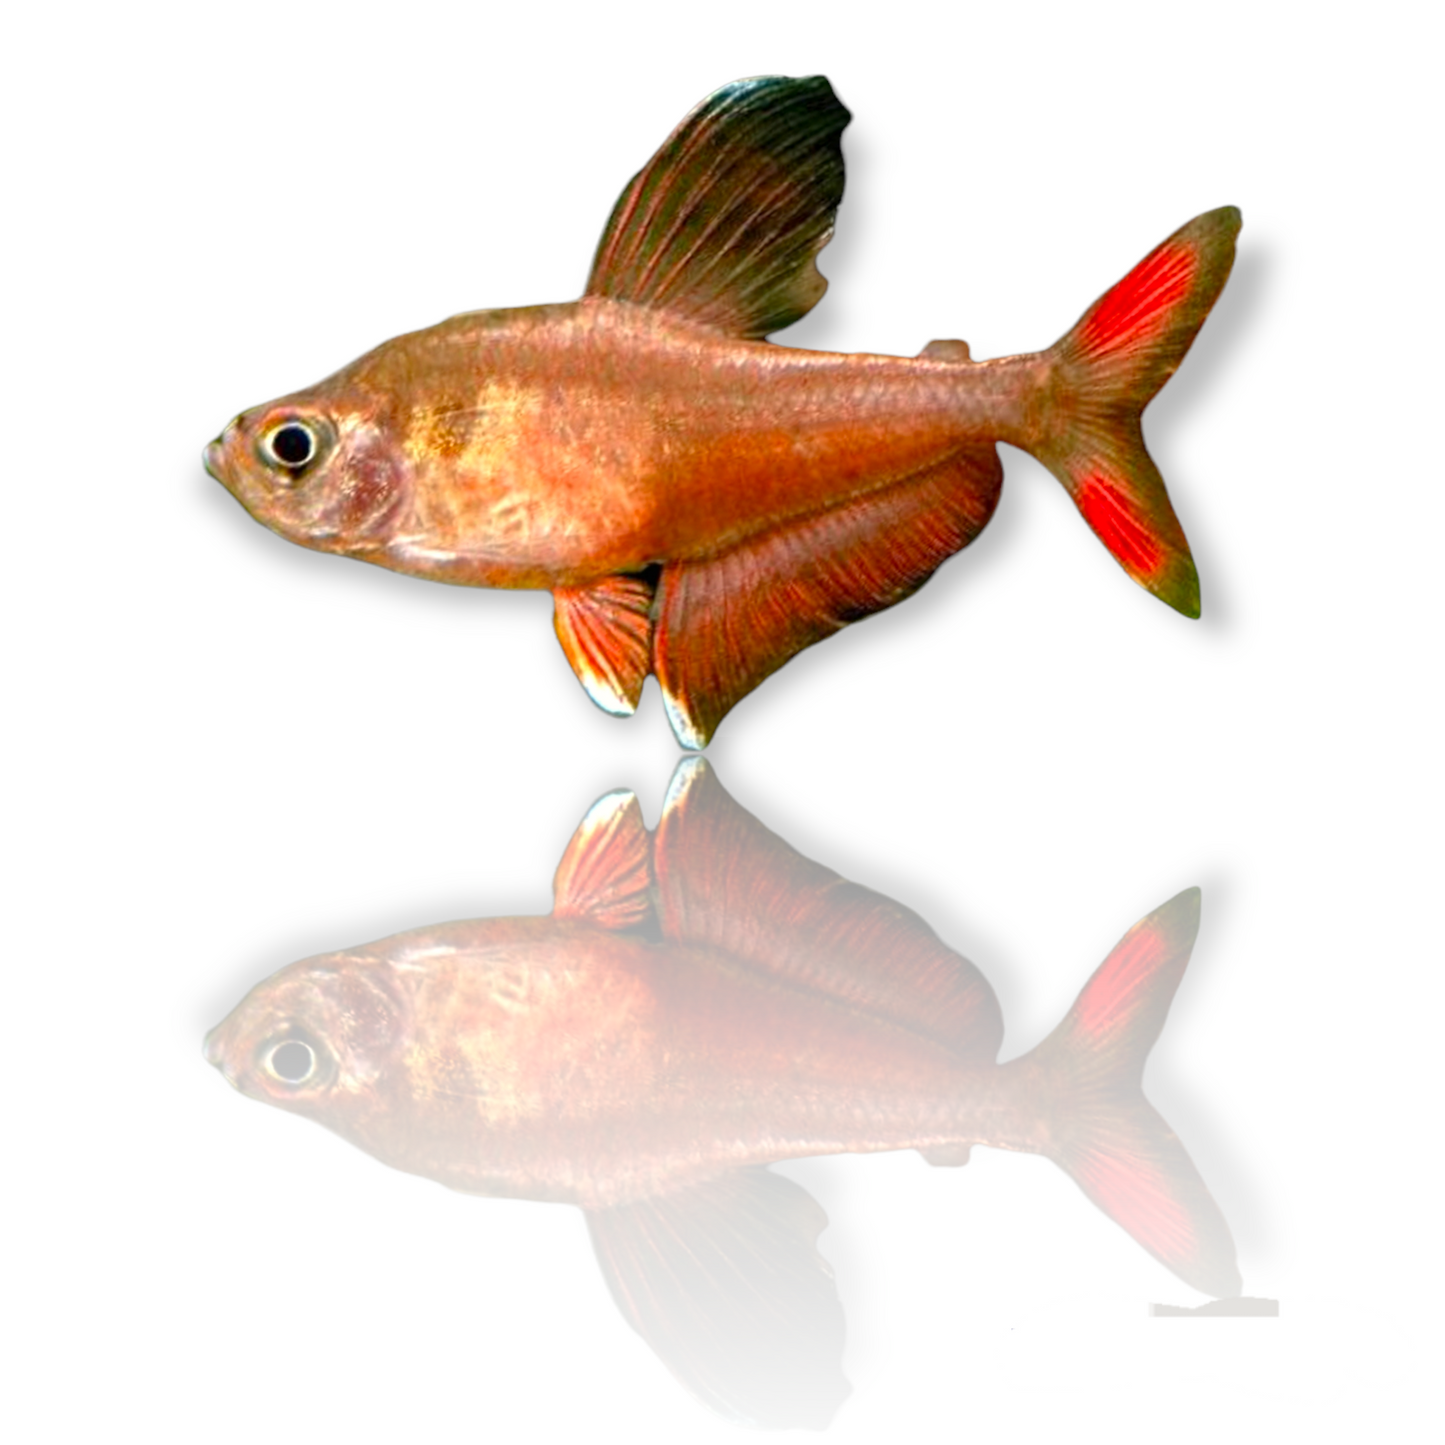 Rosy Tetra (Hyphessobrycon Rosaceus) Live Nano Freshwater Aquarium Fish